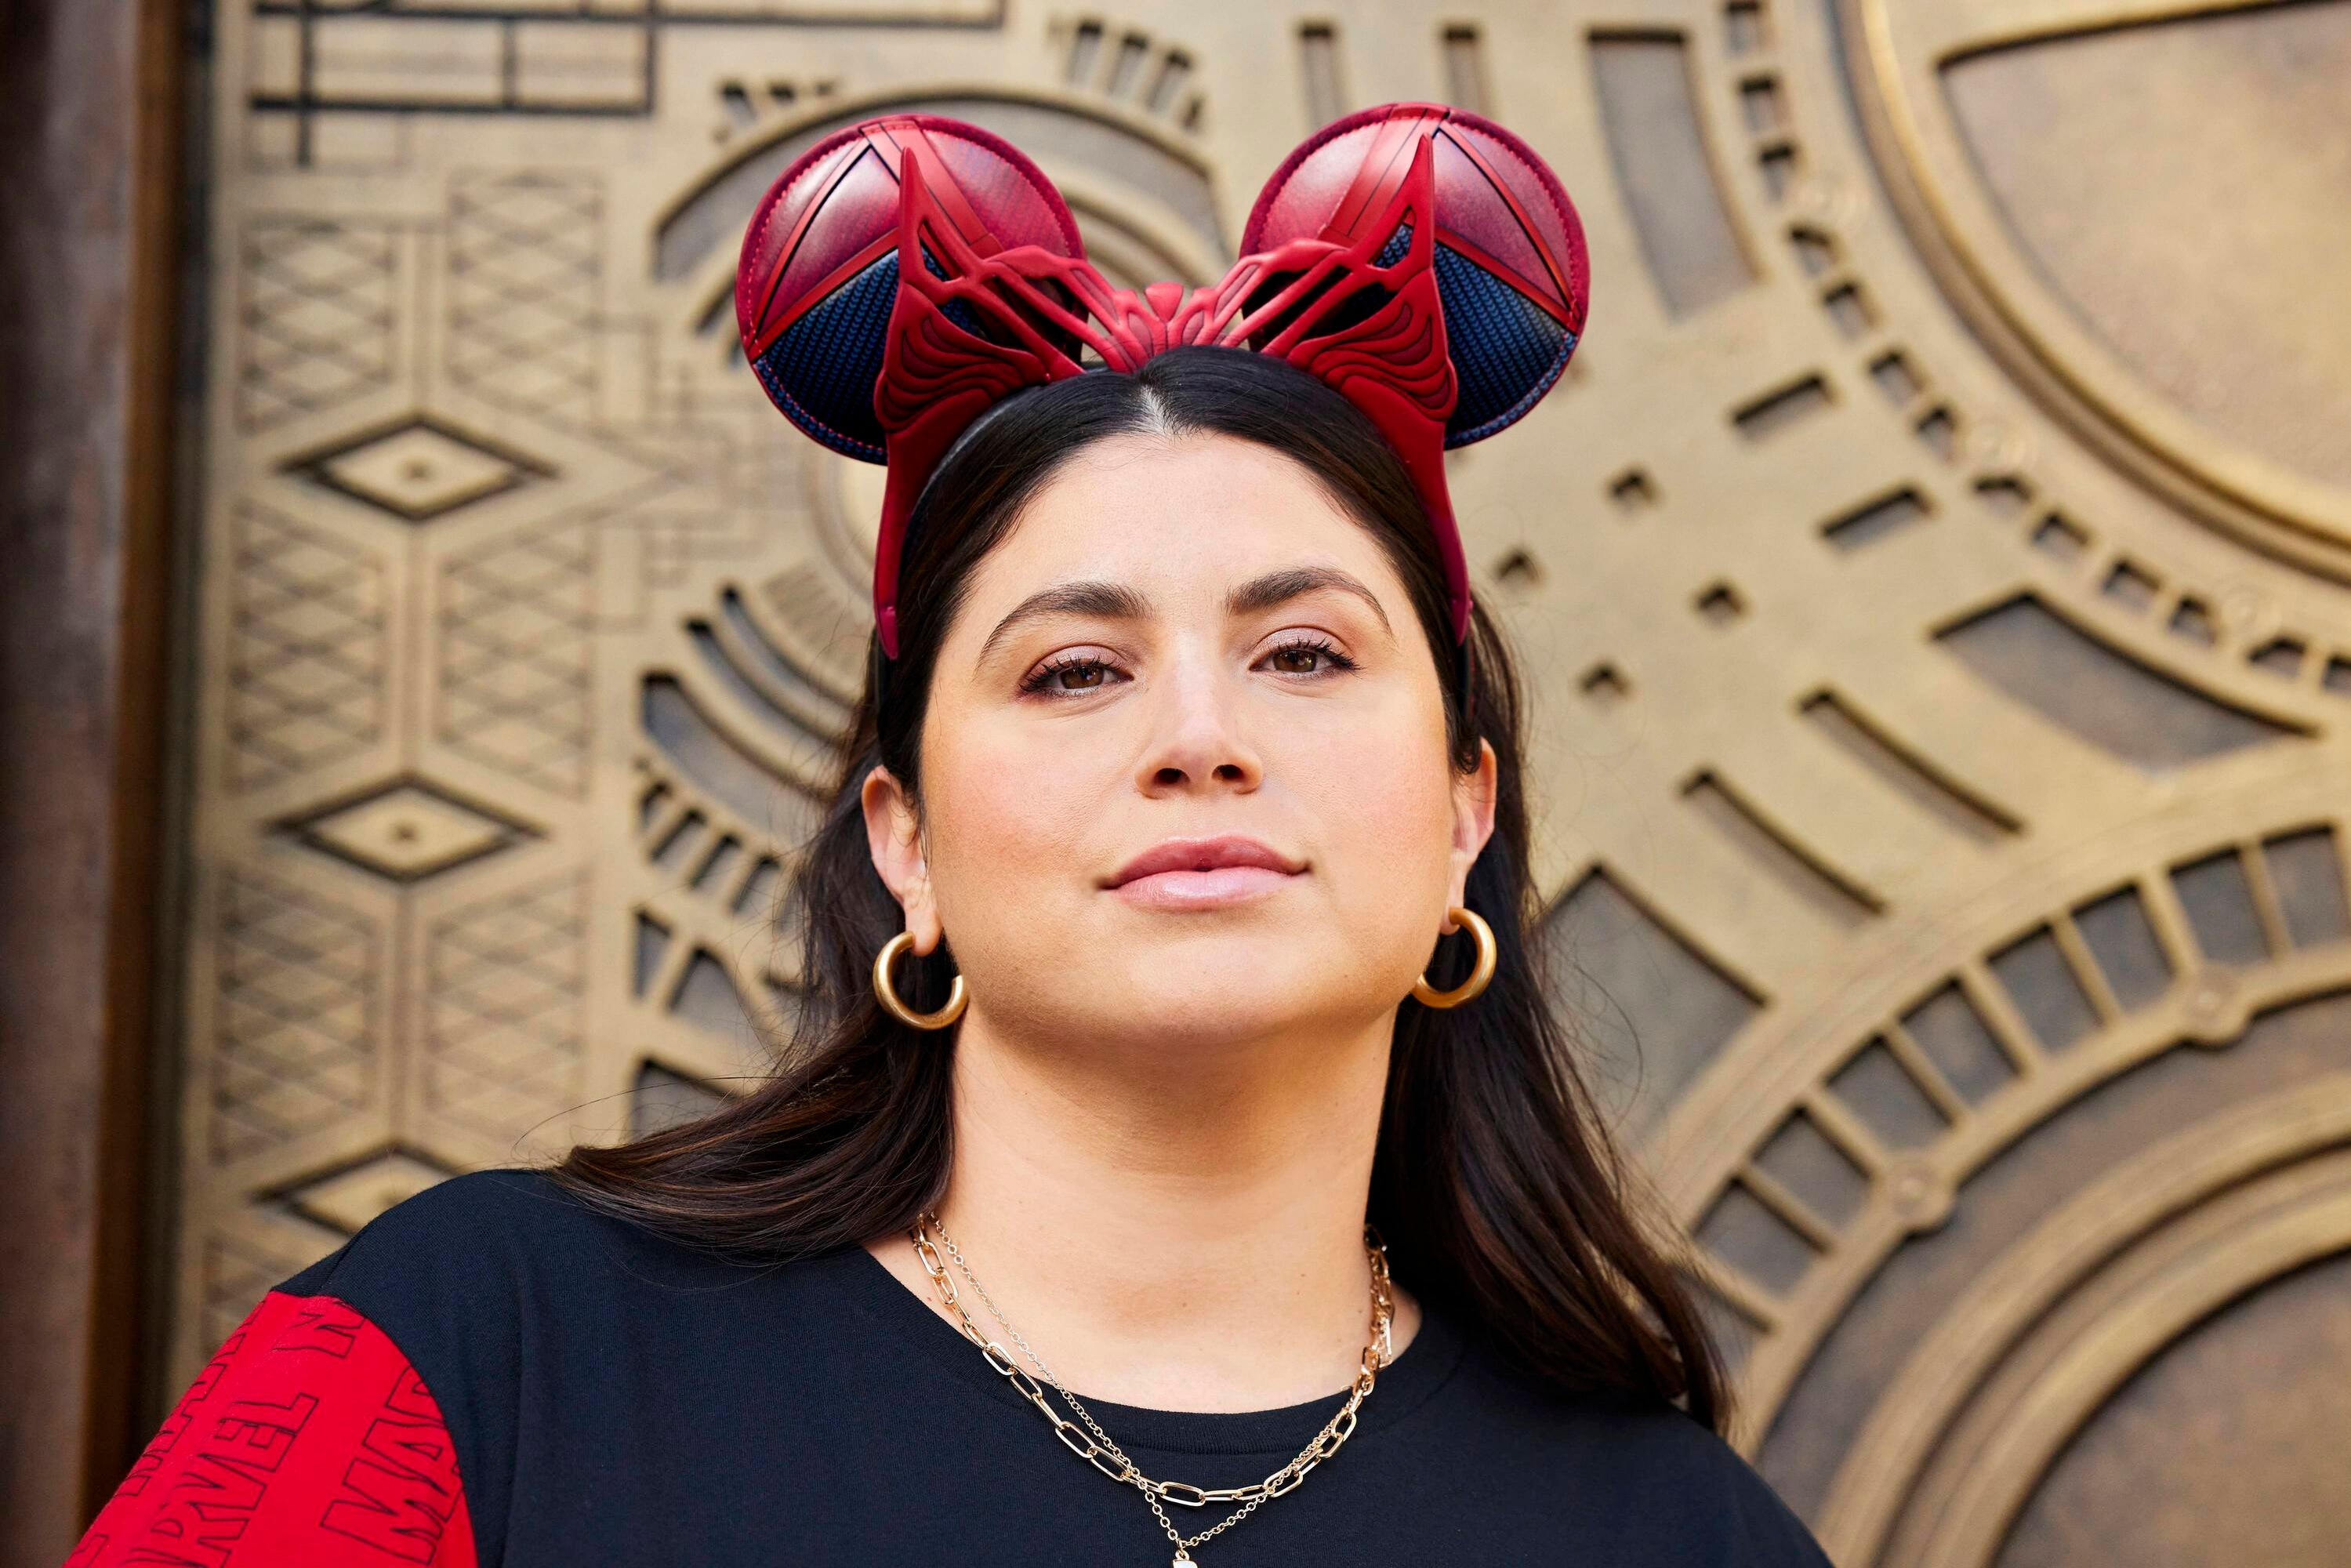 SHOP: New Sorcerer Mickey Plush Ear Headband Arrives on shopDisney -  Disneyland News Today